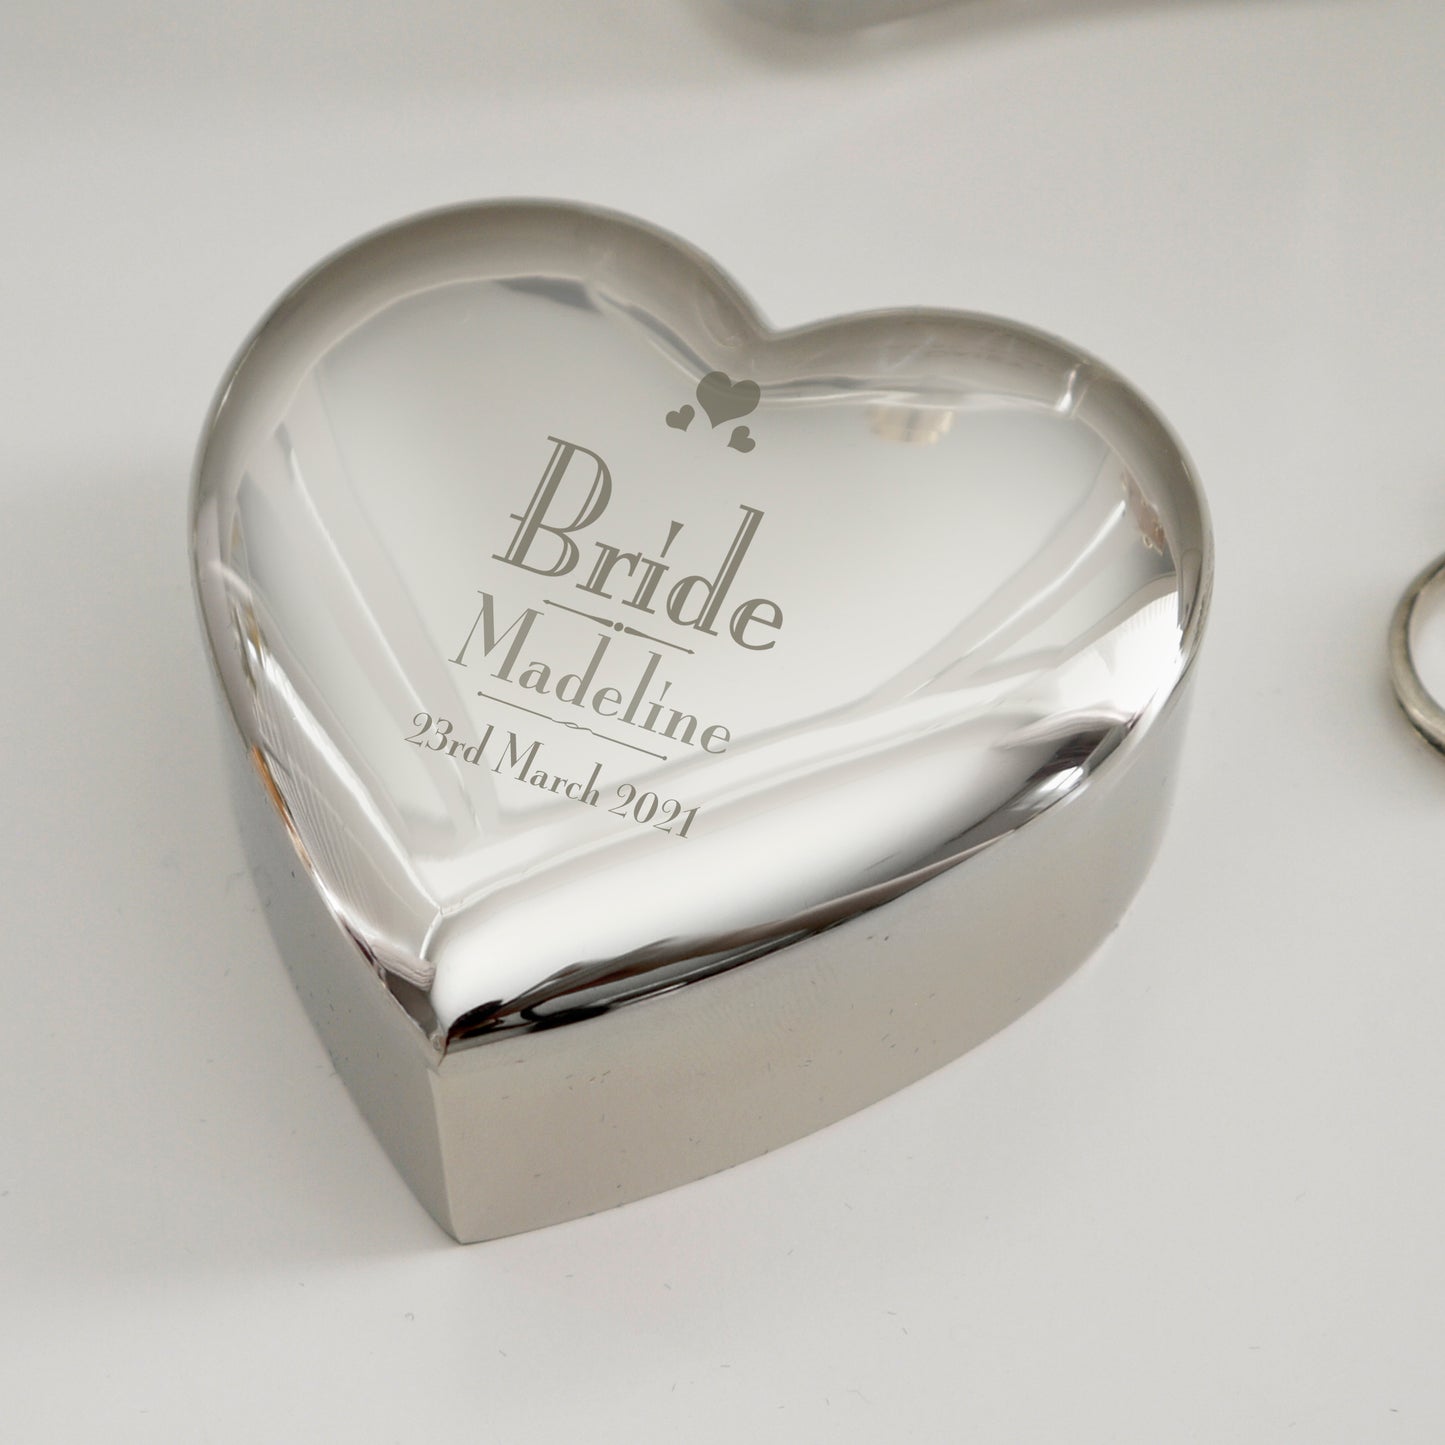 Personalised Decorative Wedding Bride Heart Trinket Box - Personalise It!